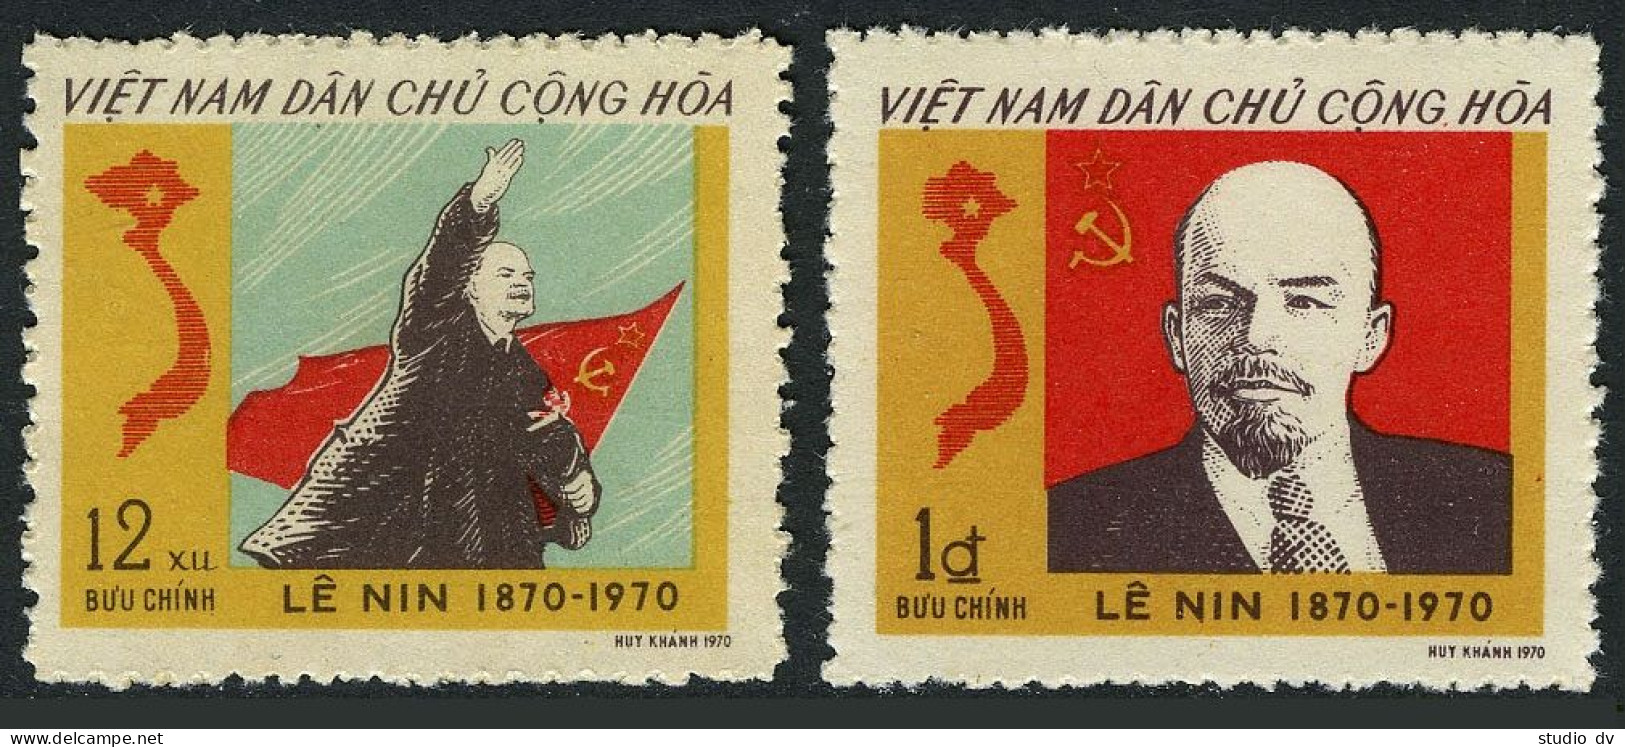 Viet Nam 579-580, MNH. Michel 608-609. Vladimir Lenin, Birth Centenary, 1970. - Viêt-Nam